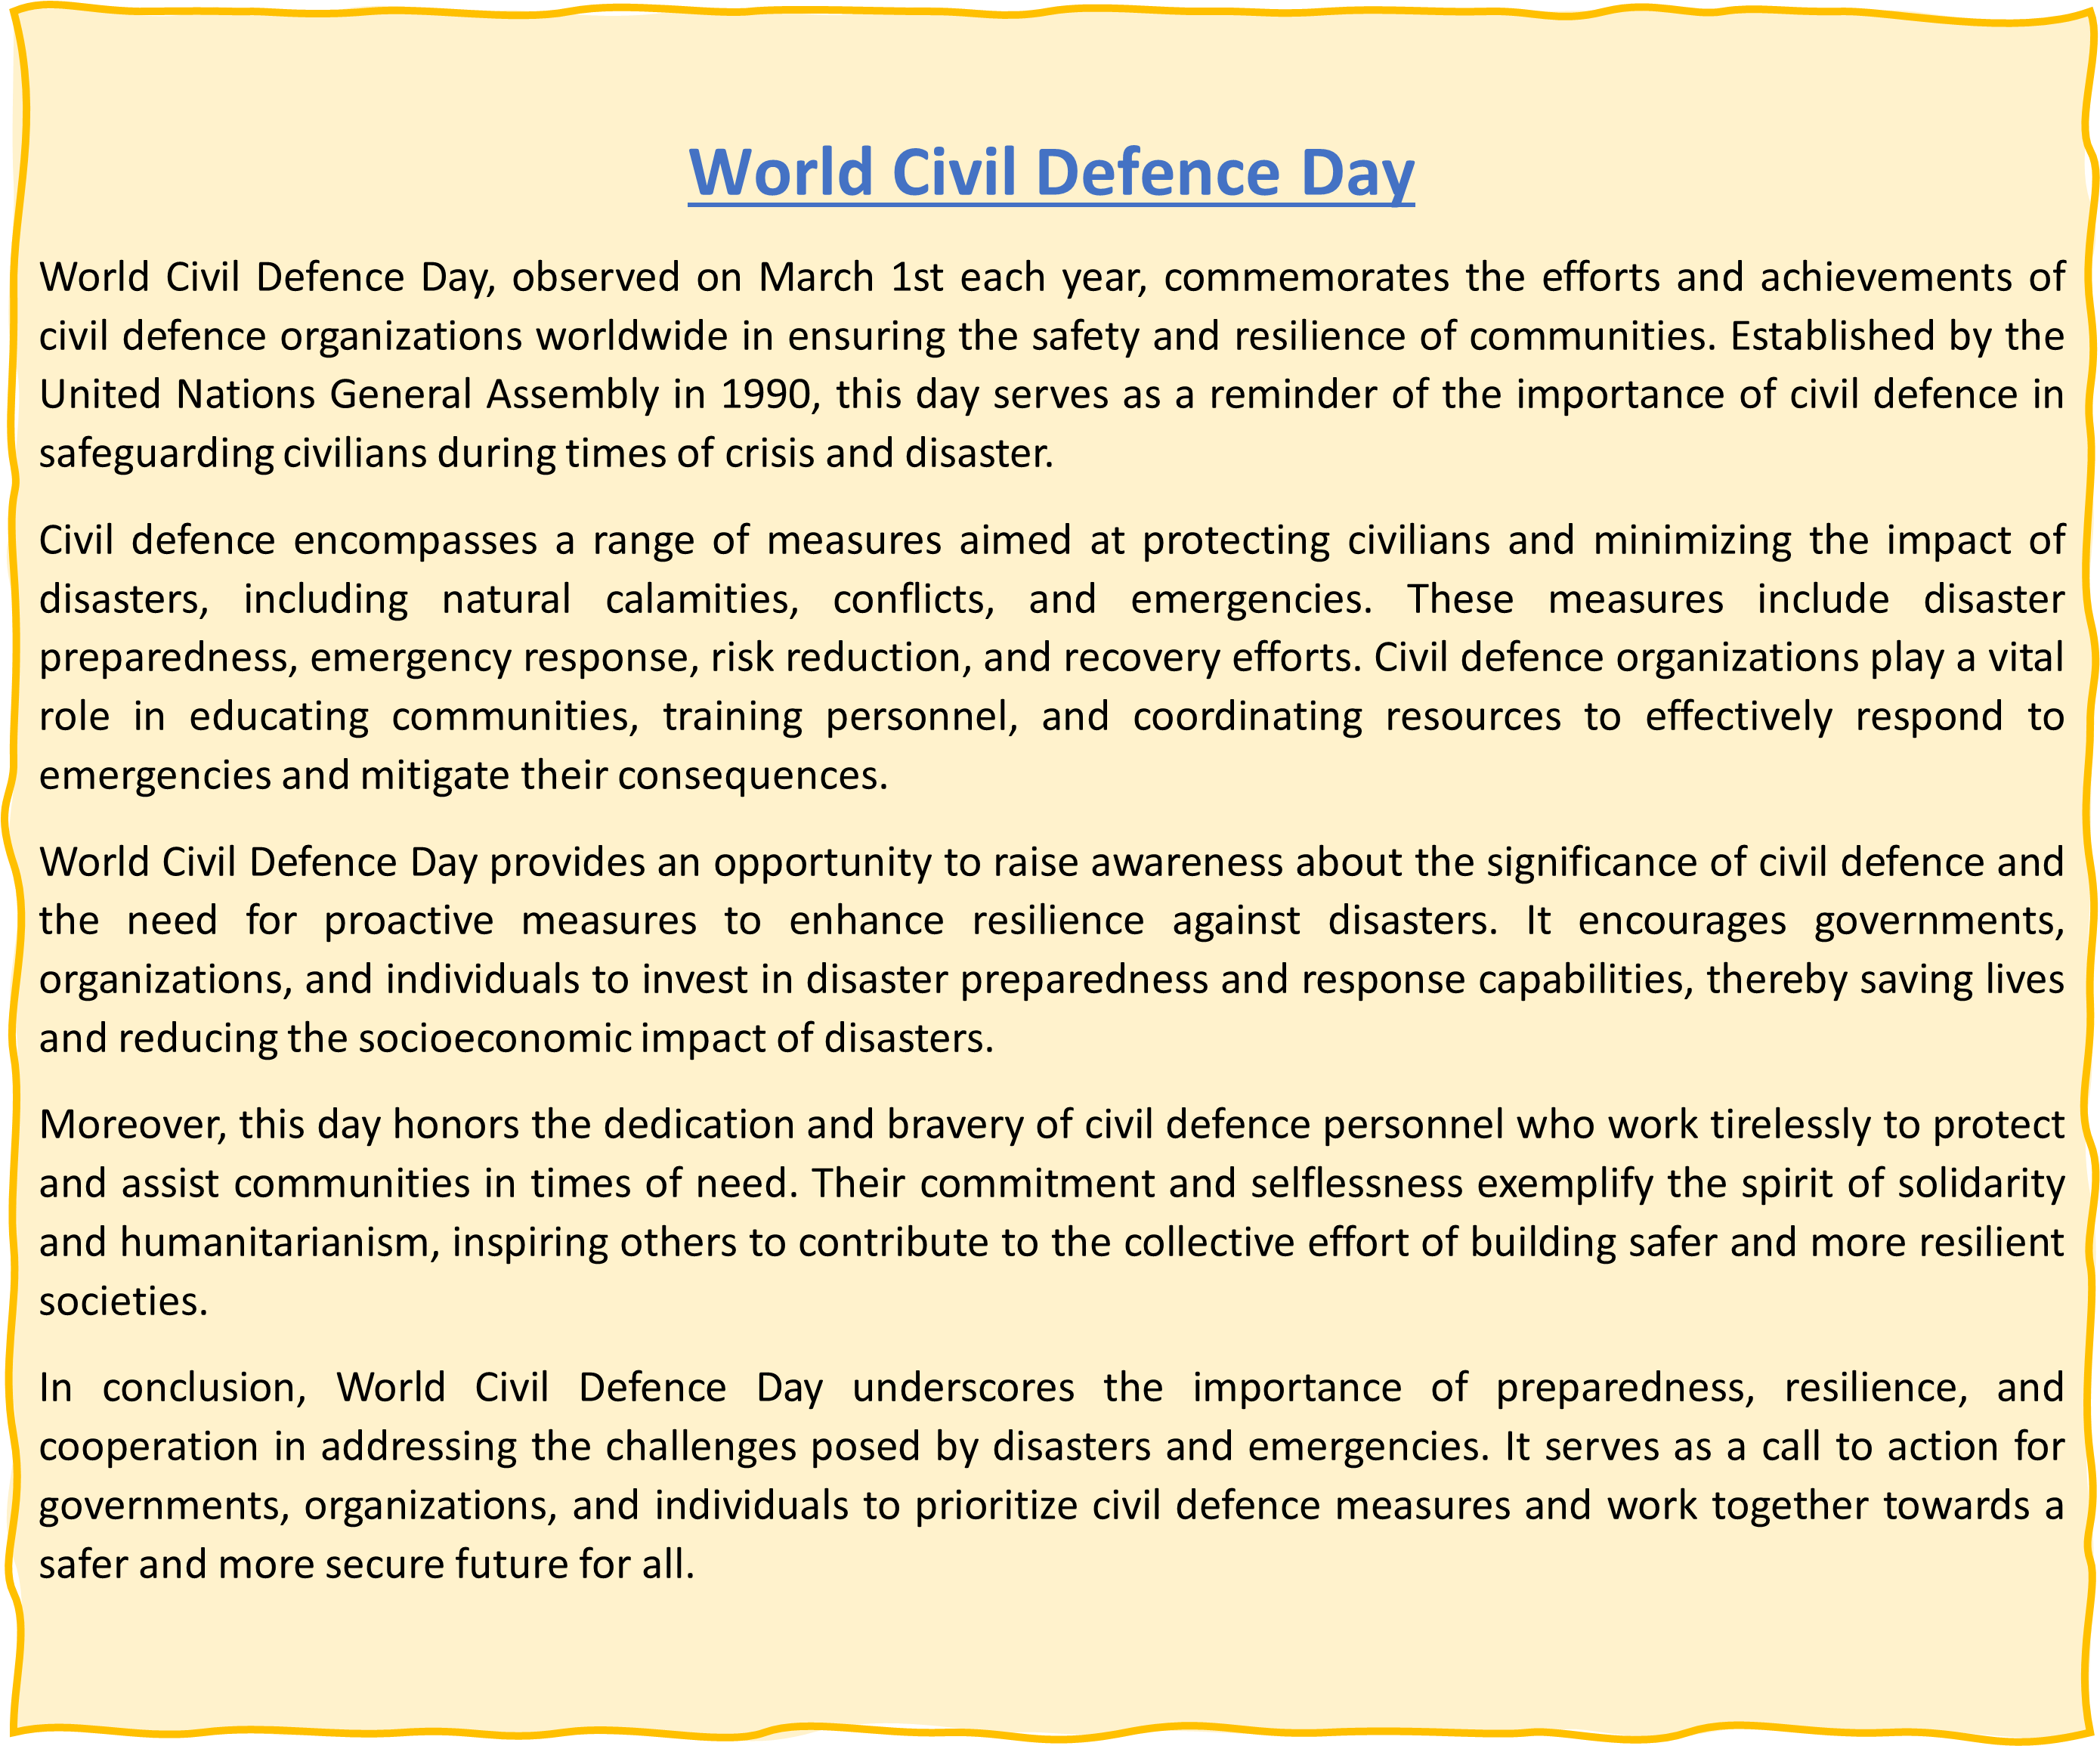 World Civil Defense Day Short Essay in English